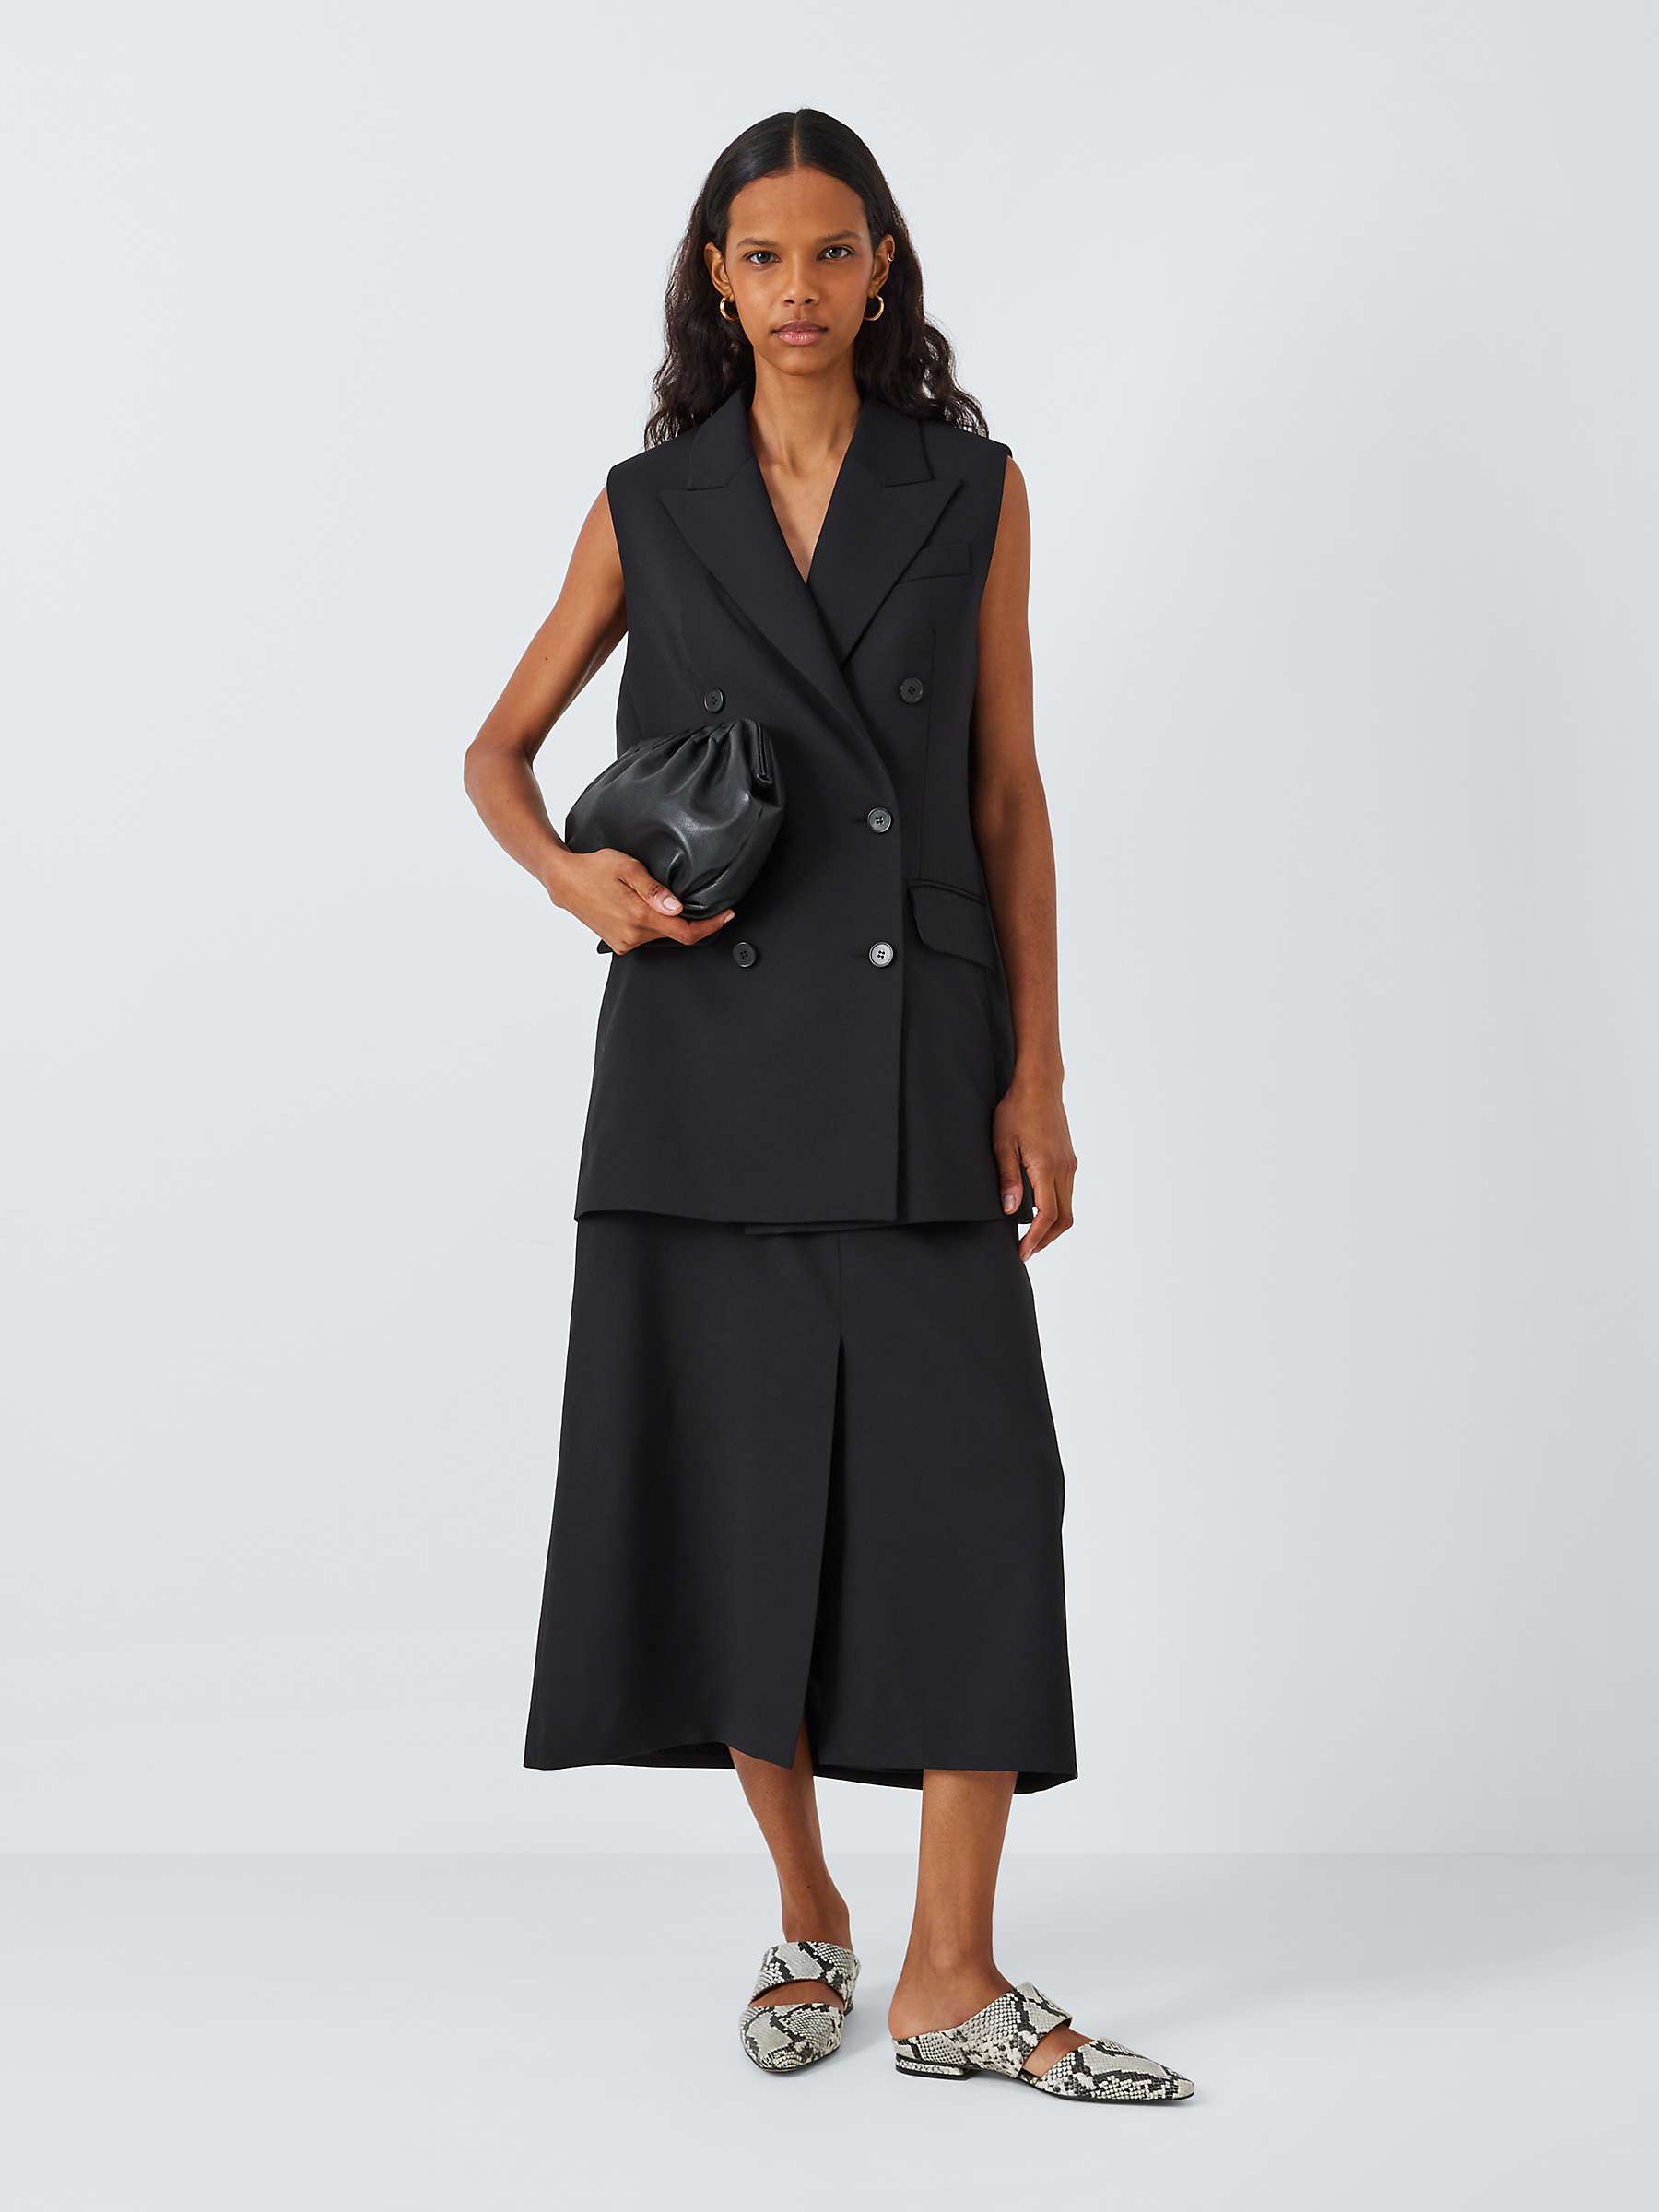 Buy John Lewis A-Line Wool Blend Skirt, Black Online at johnlewis.com